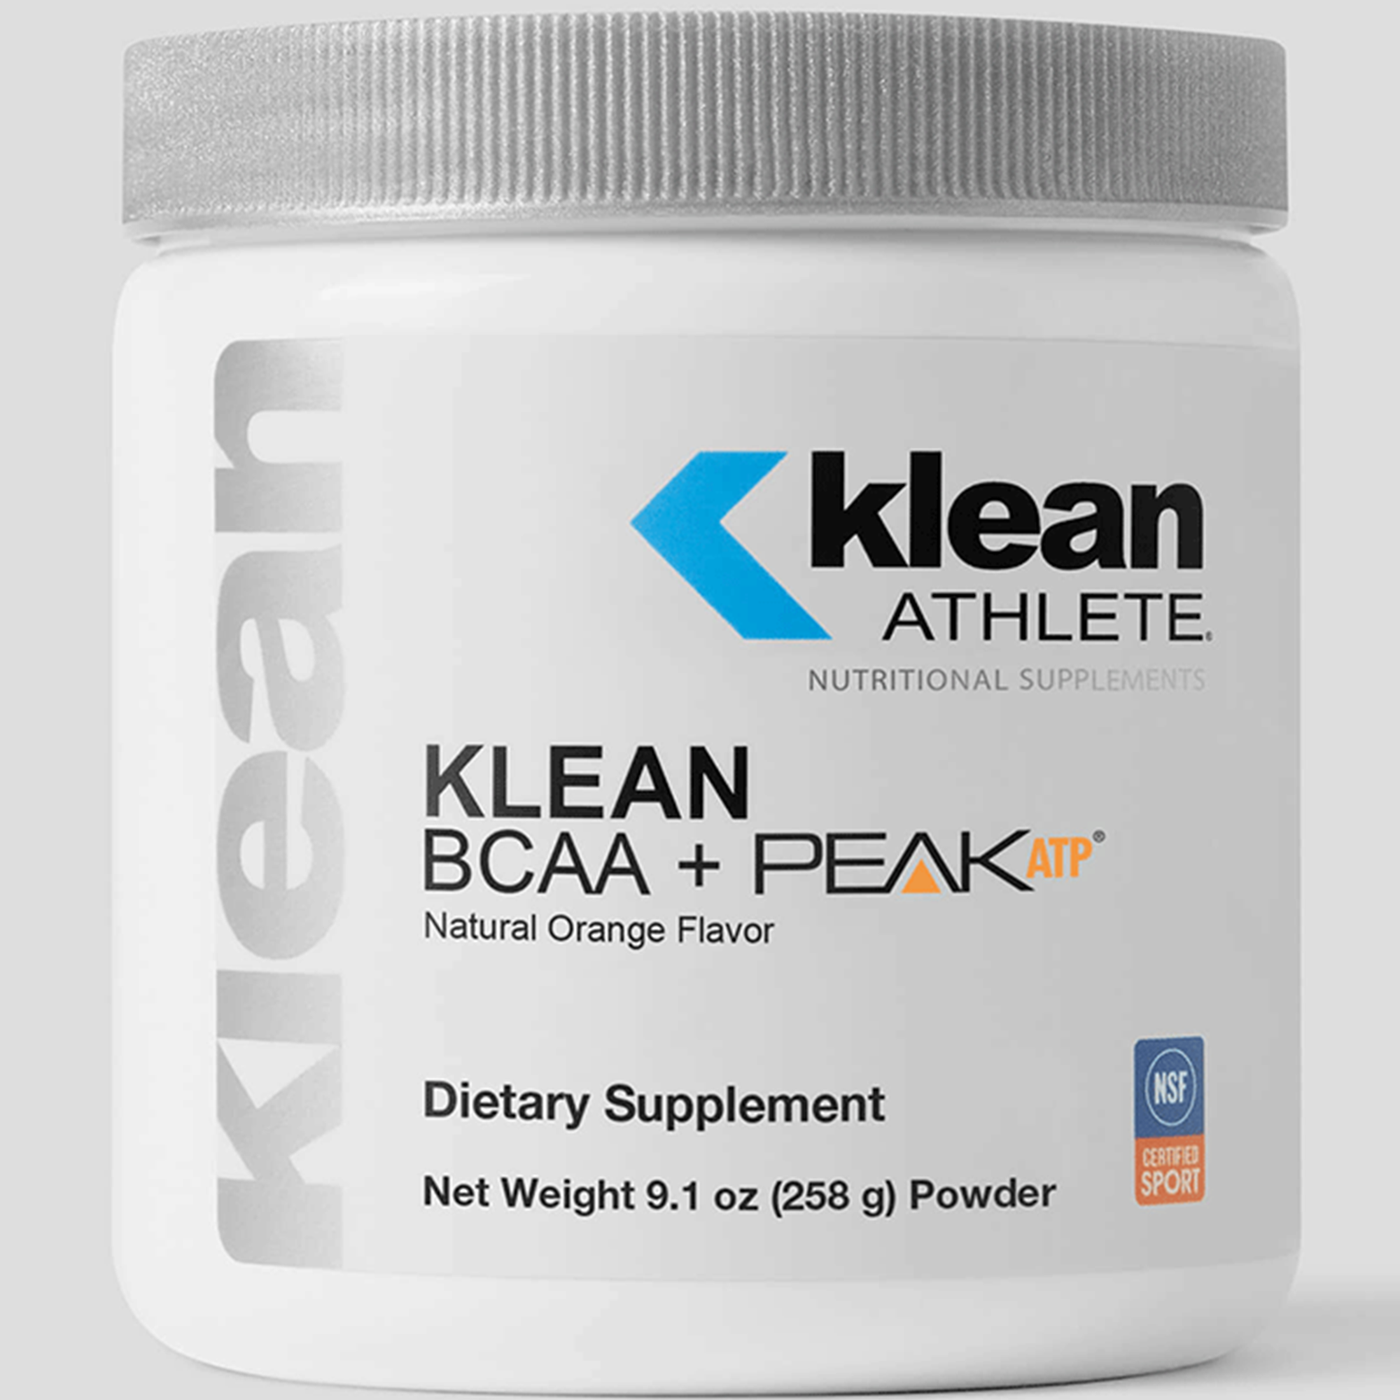 Klean BCAA + PEAK ATP  Curated Wellness